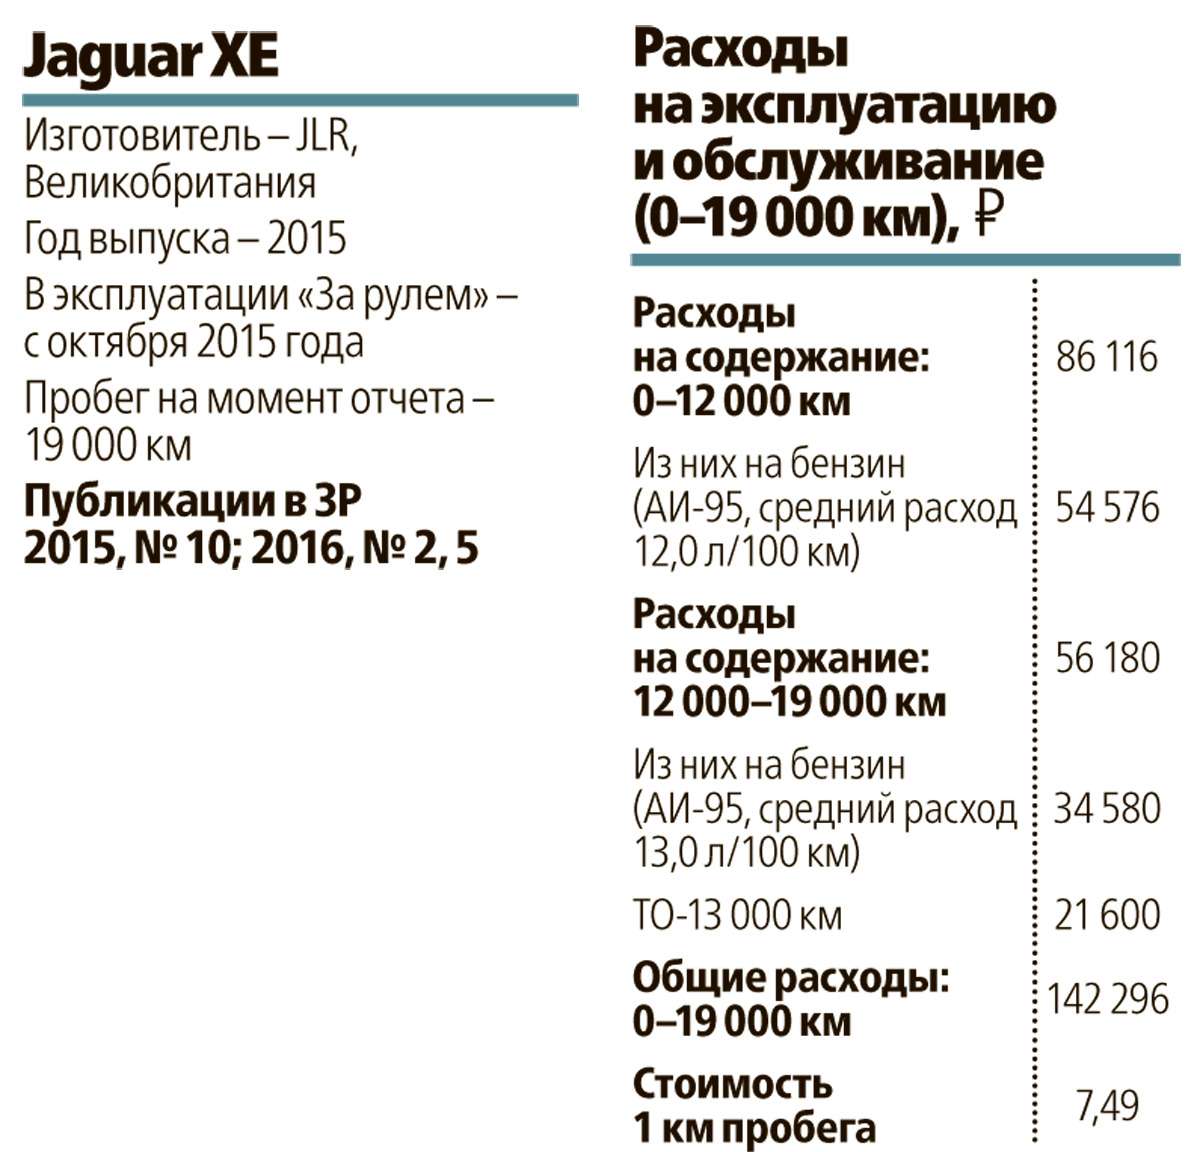 Jaguar XE.